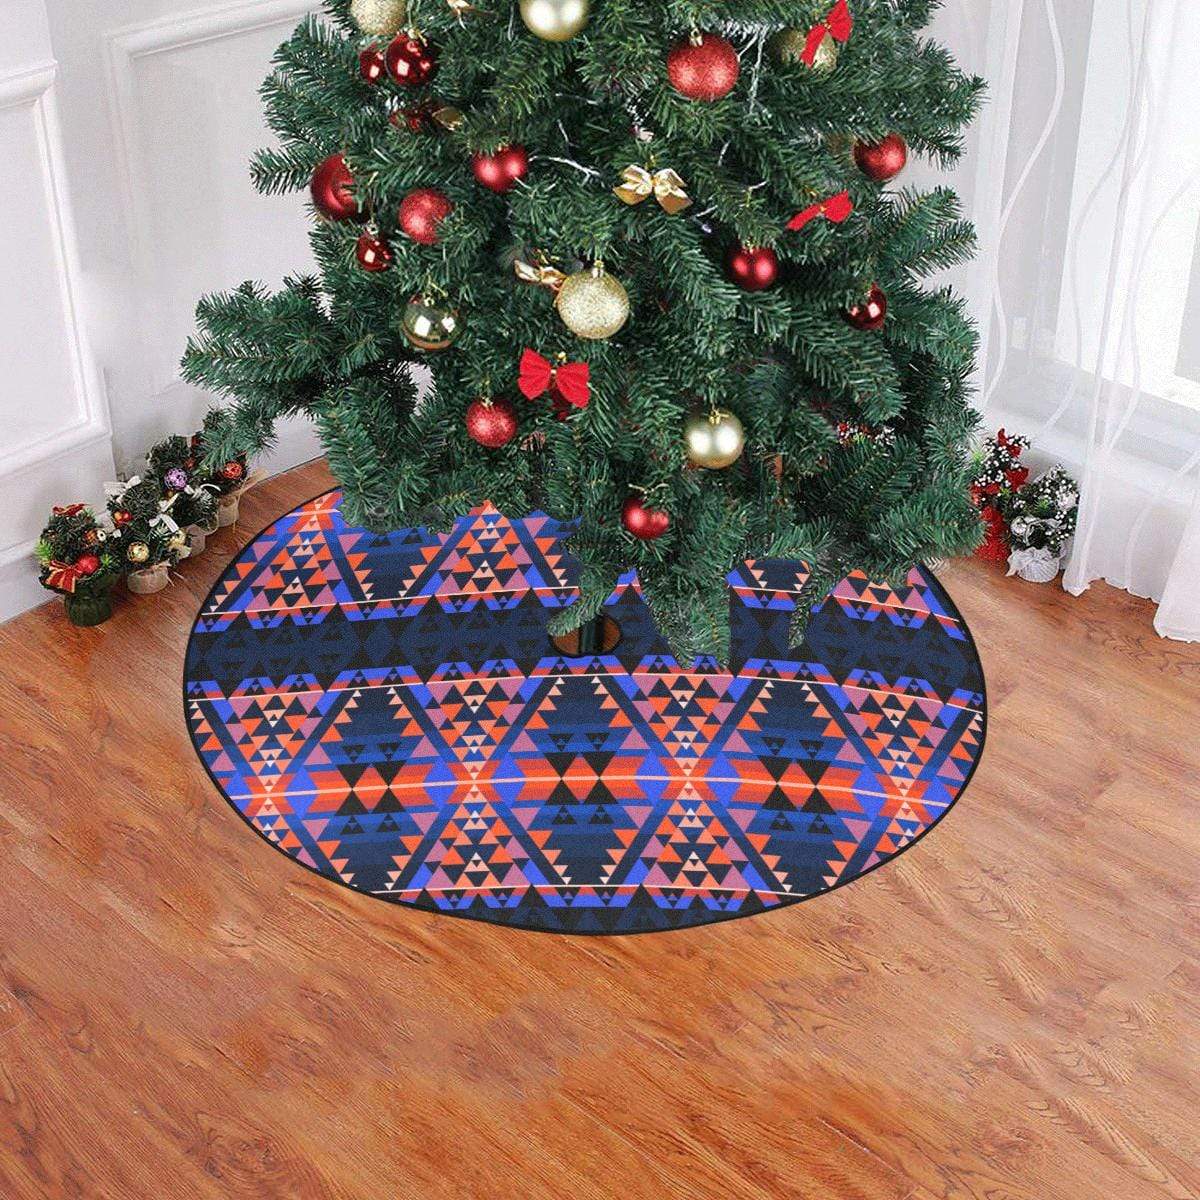 Writing on Stone Battle Christmas Tree Skirt 47" x 47" Christmas Tree Skirt e-joyer 